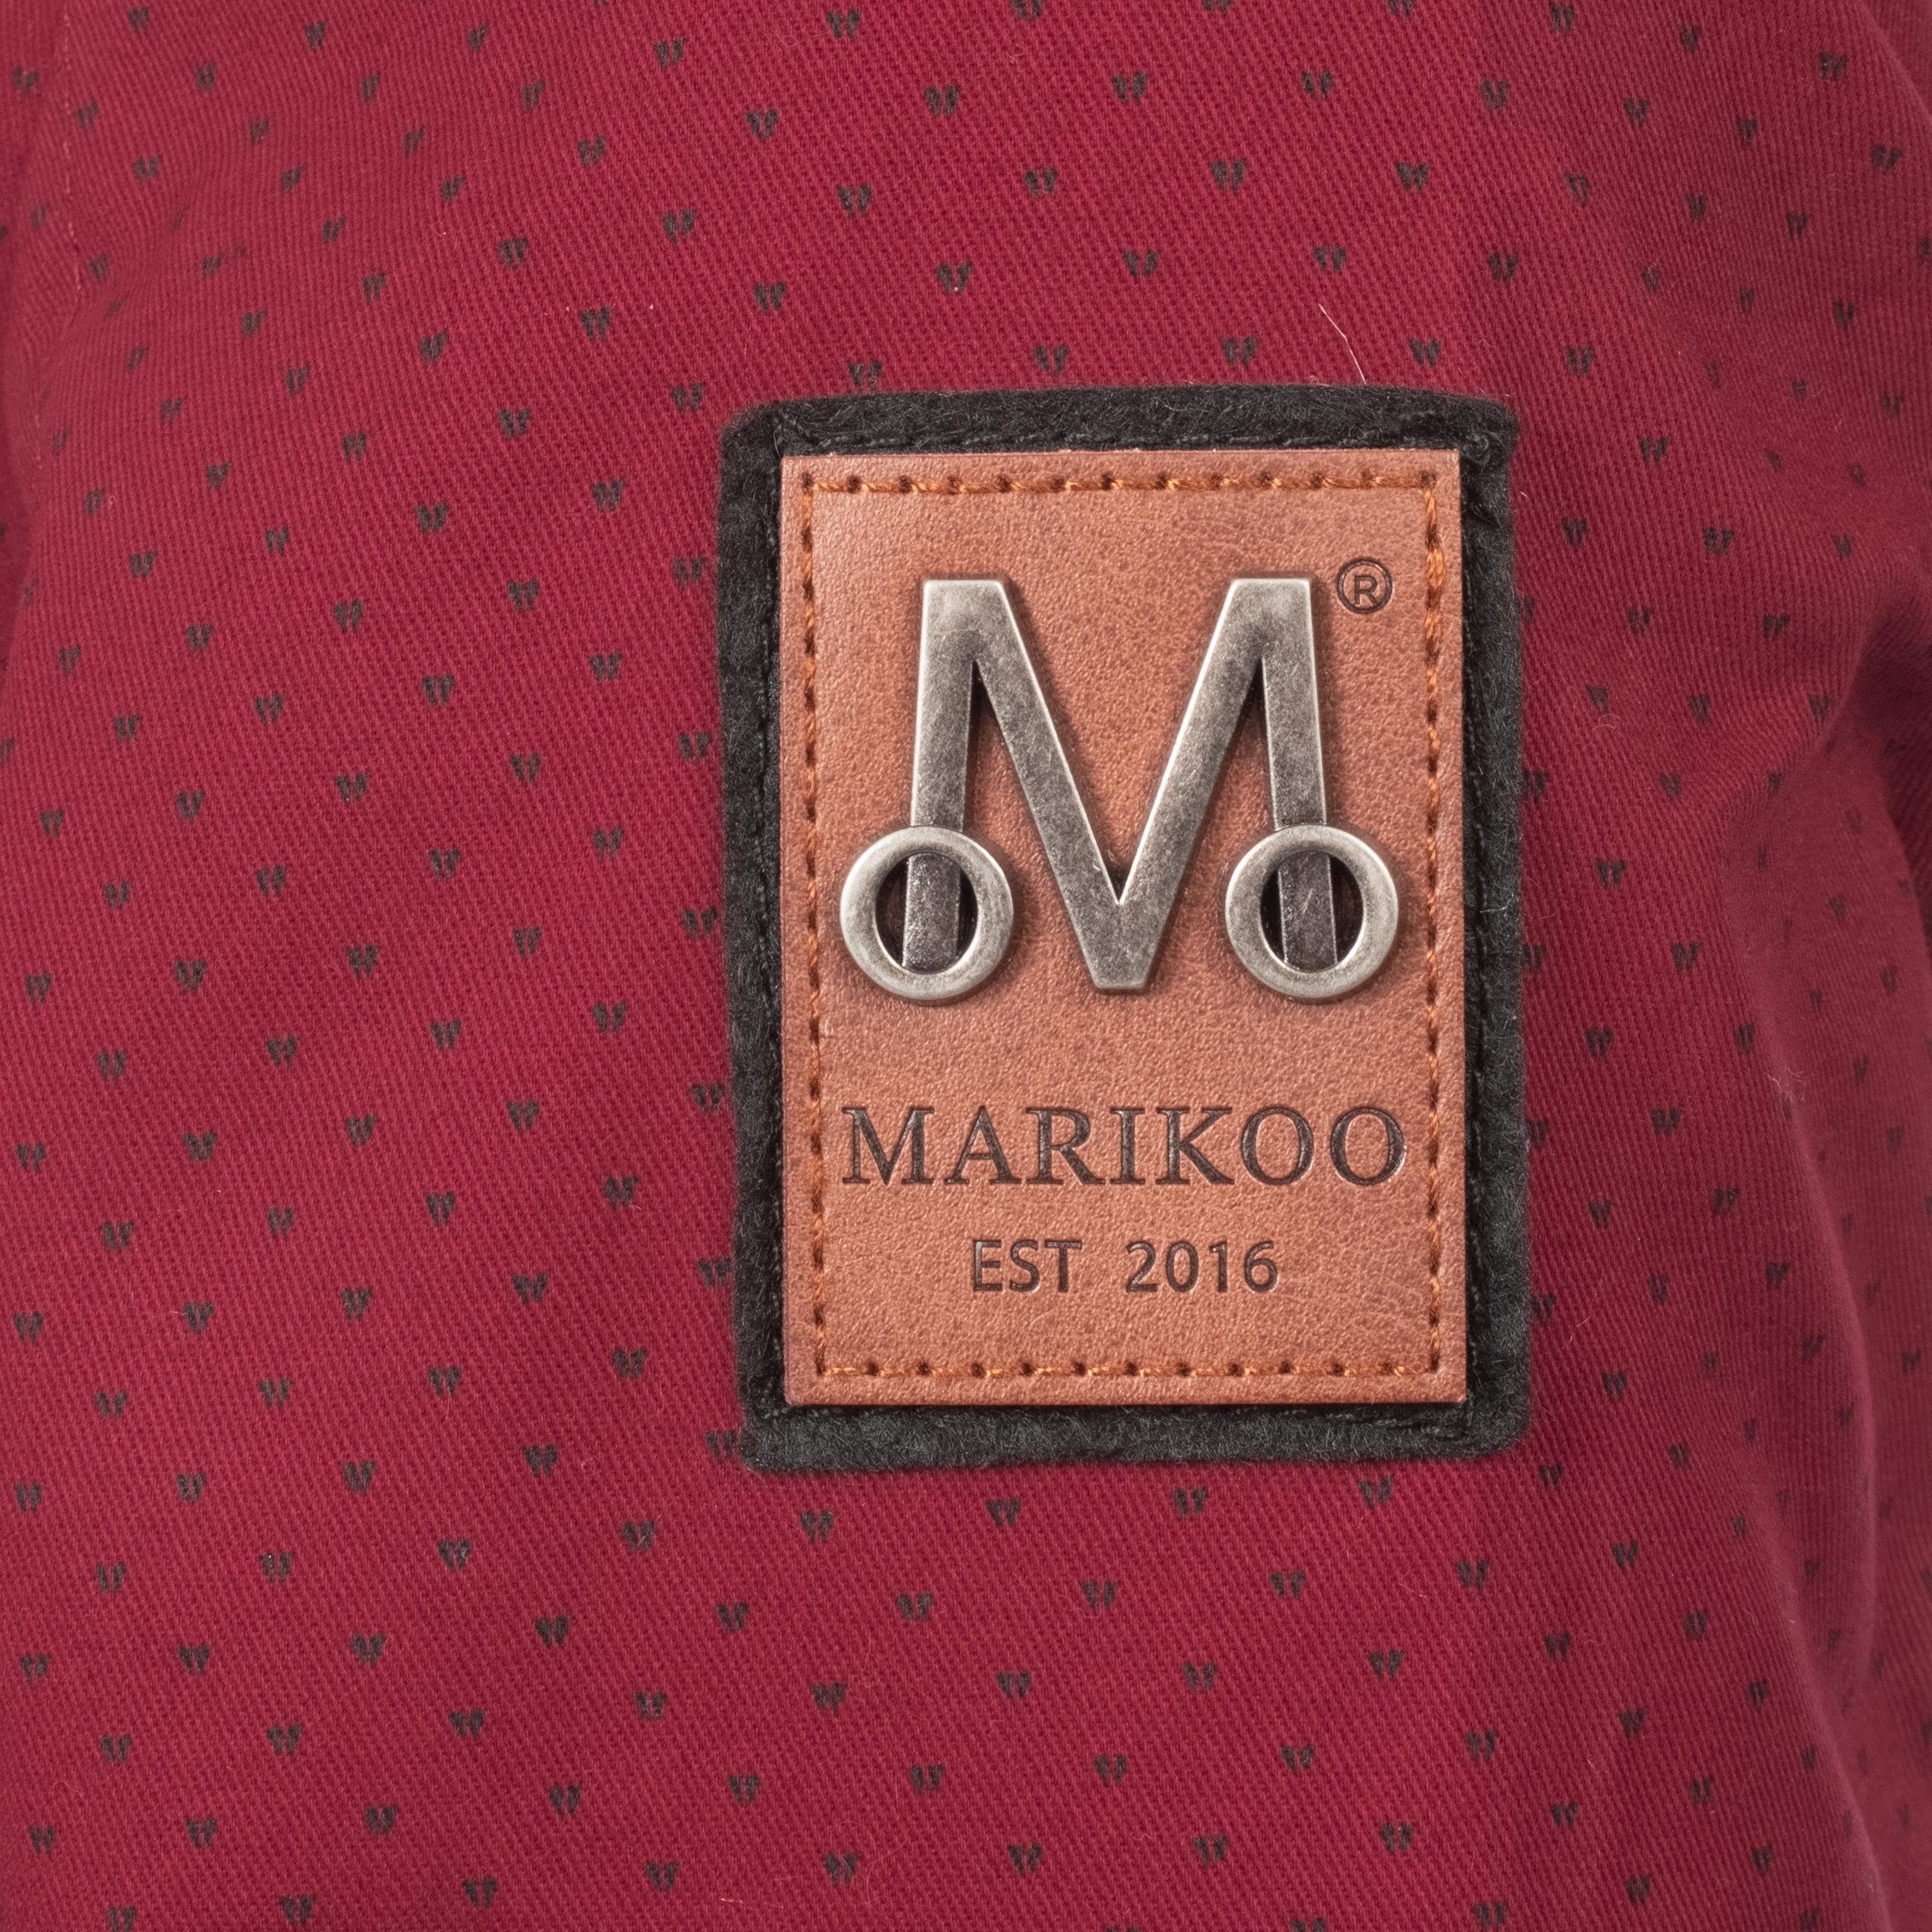 großer Kapuze mit Nyokoo modische Übergangsjacke Outdoorjacke rot Baumwoll Marikoo